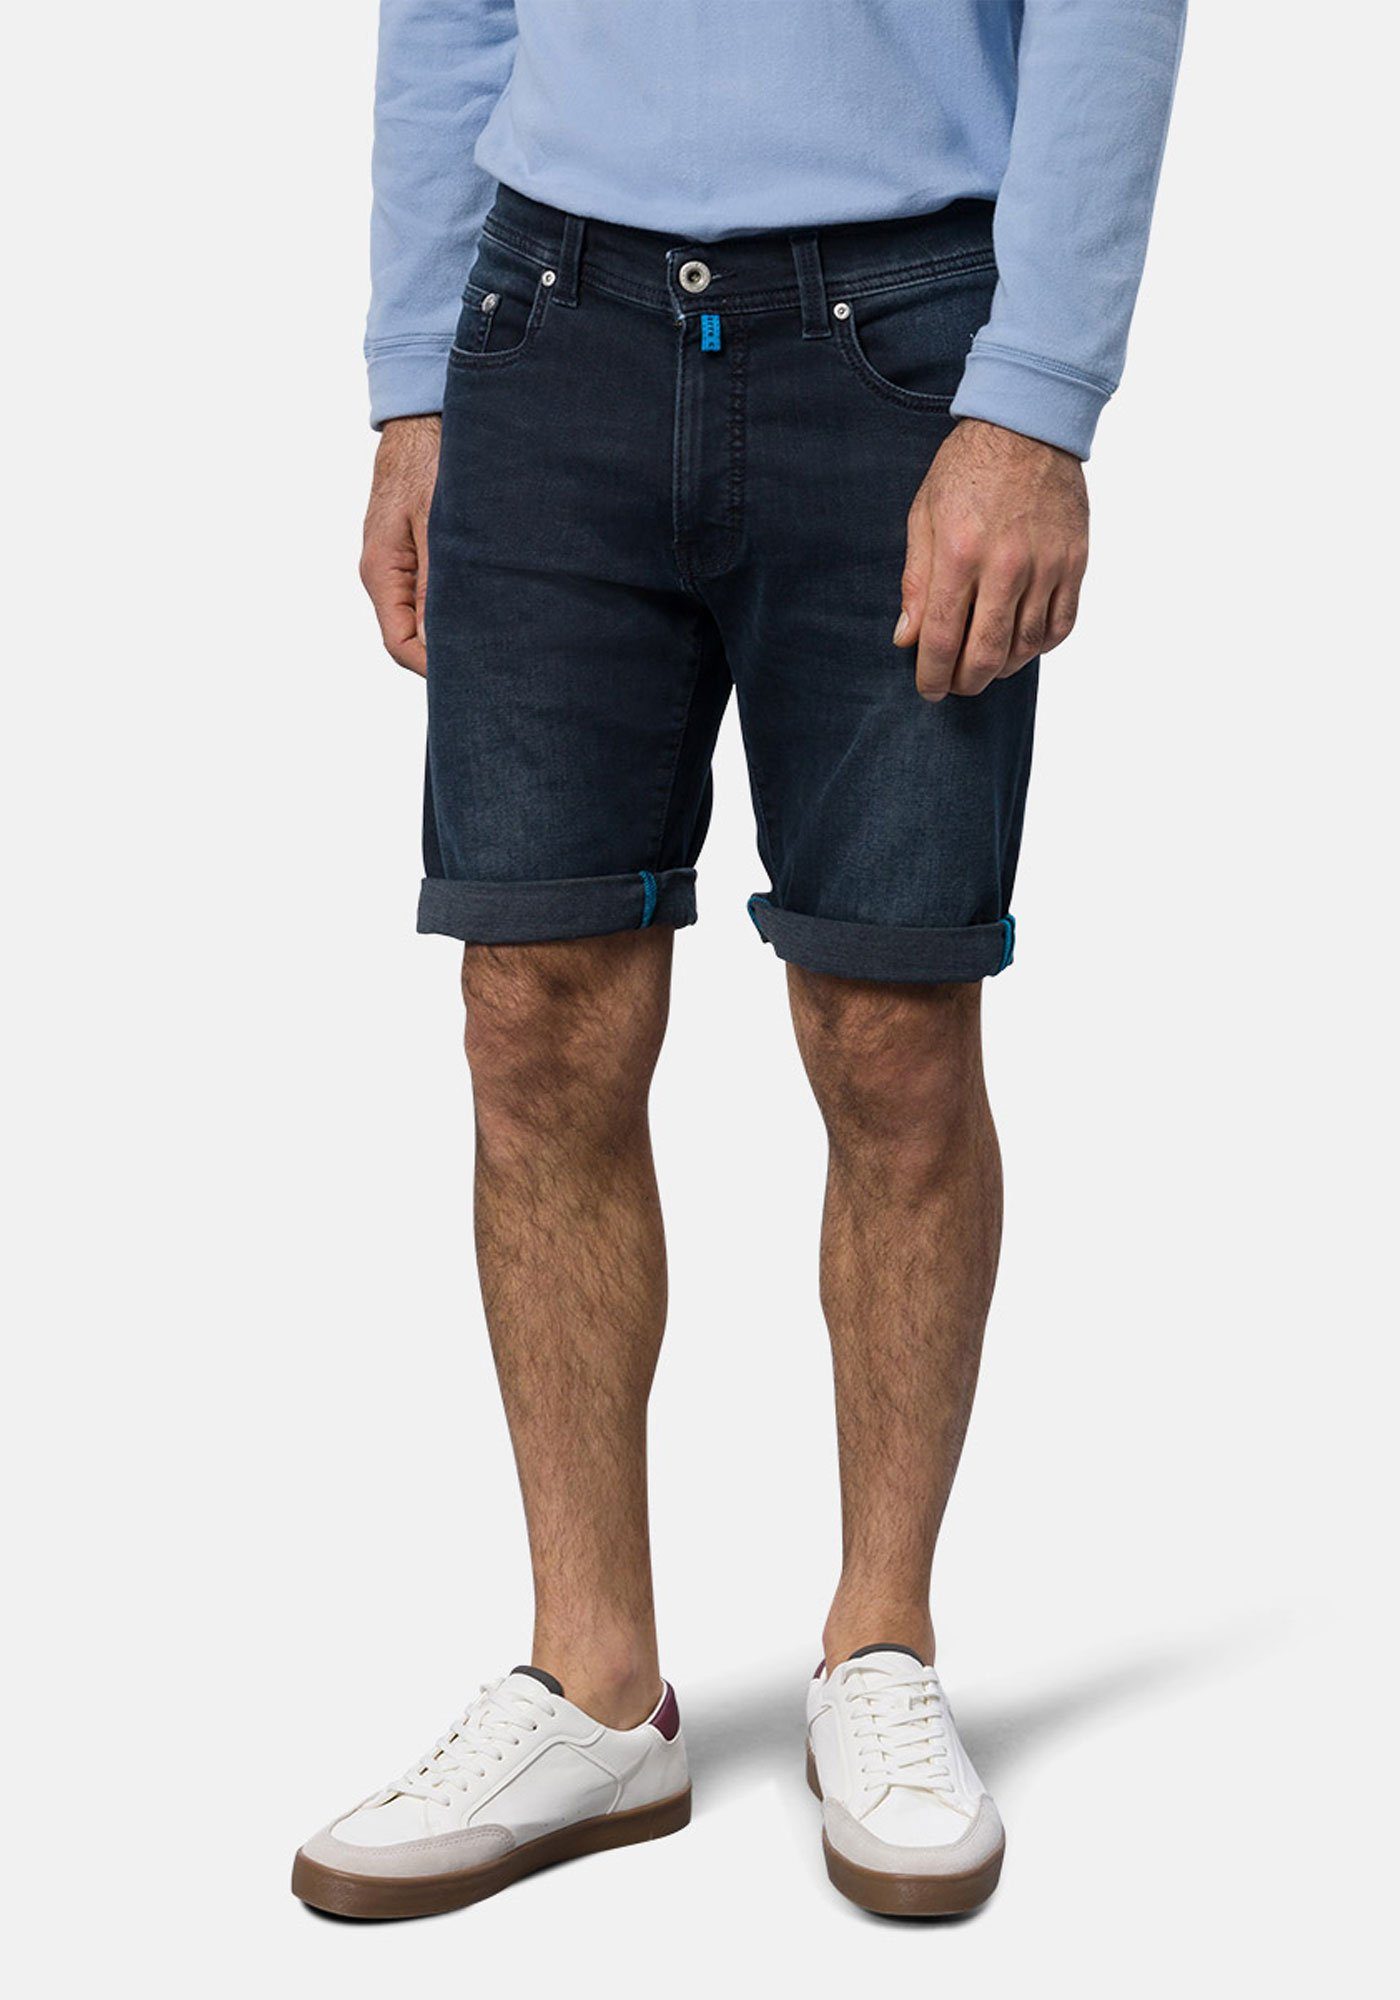 Pierre Cardin Jeansbermudas Lyon 5-Pocket Futureflex Denim Jeans Shorts Summer Night Blue